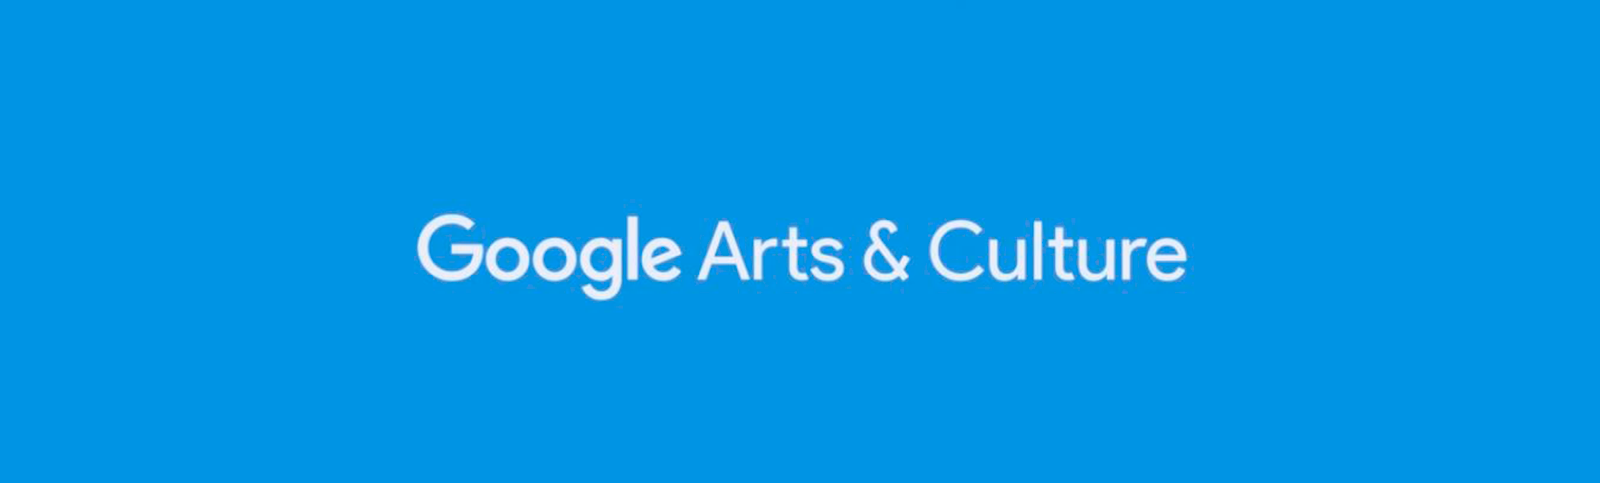 google art and culture